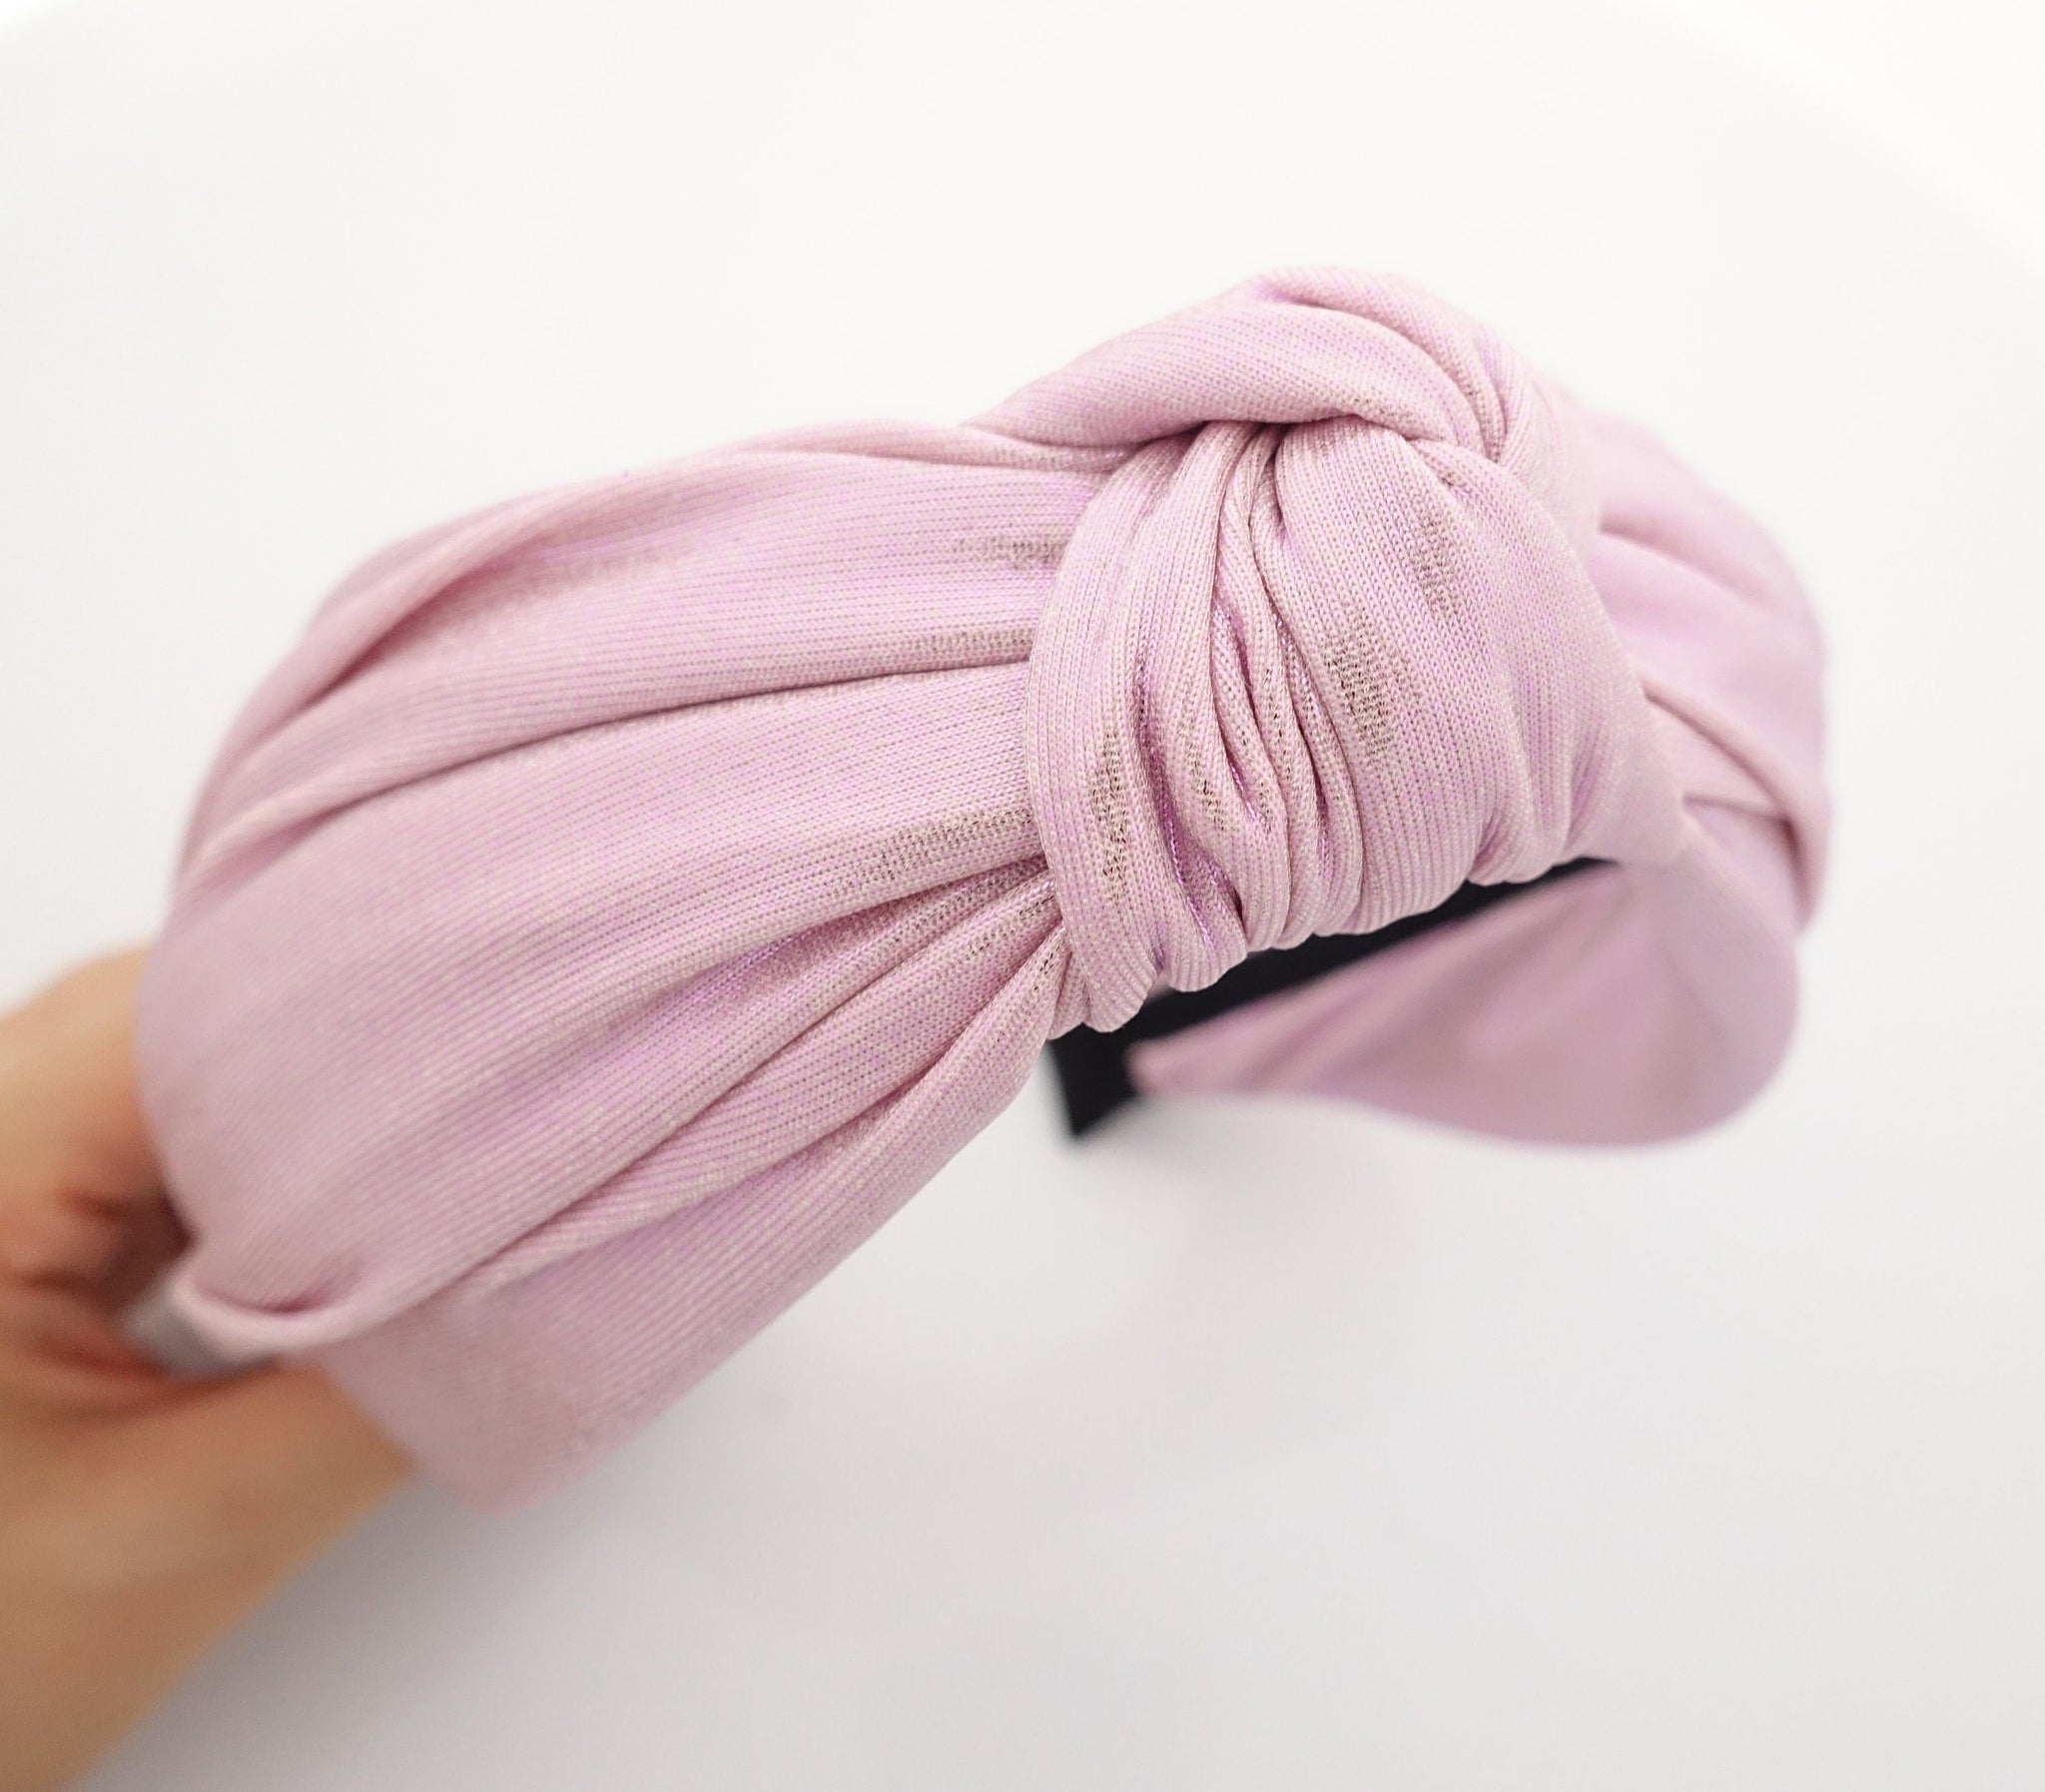 veryshine.com Headband Pink metallic front knot headband dazzling fashion hairband women hair accessory